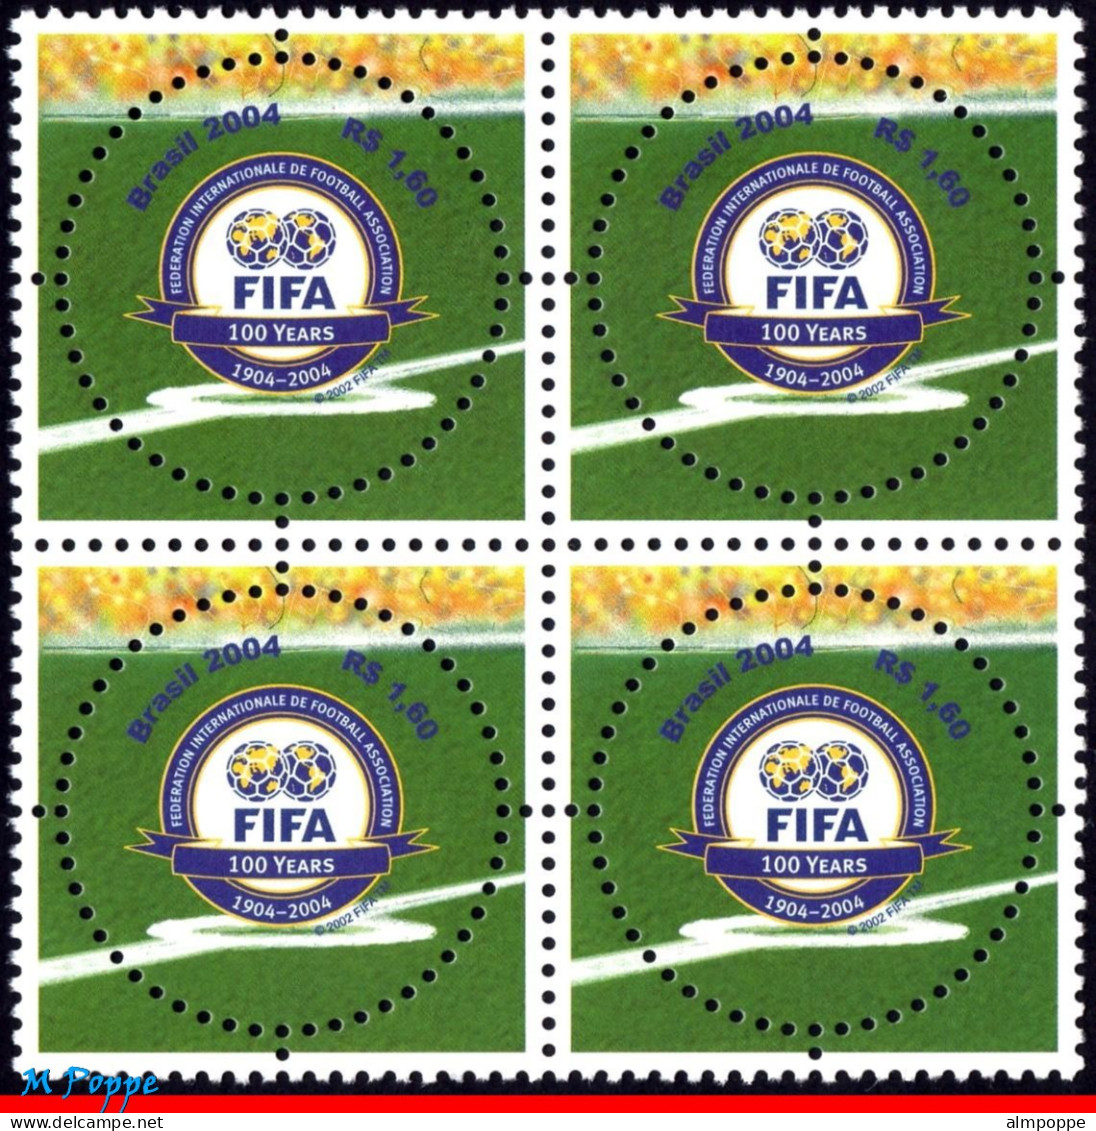 Ref. BR-2924-Q BRAZIL 2004 - FIFA CENTENARY, SPORT,MI# 3357, BLOCK MNH, FOOTBALL SOCCER 4V Sc# 2924 - Blokken & Velletjes